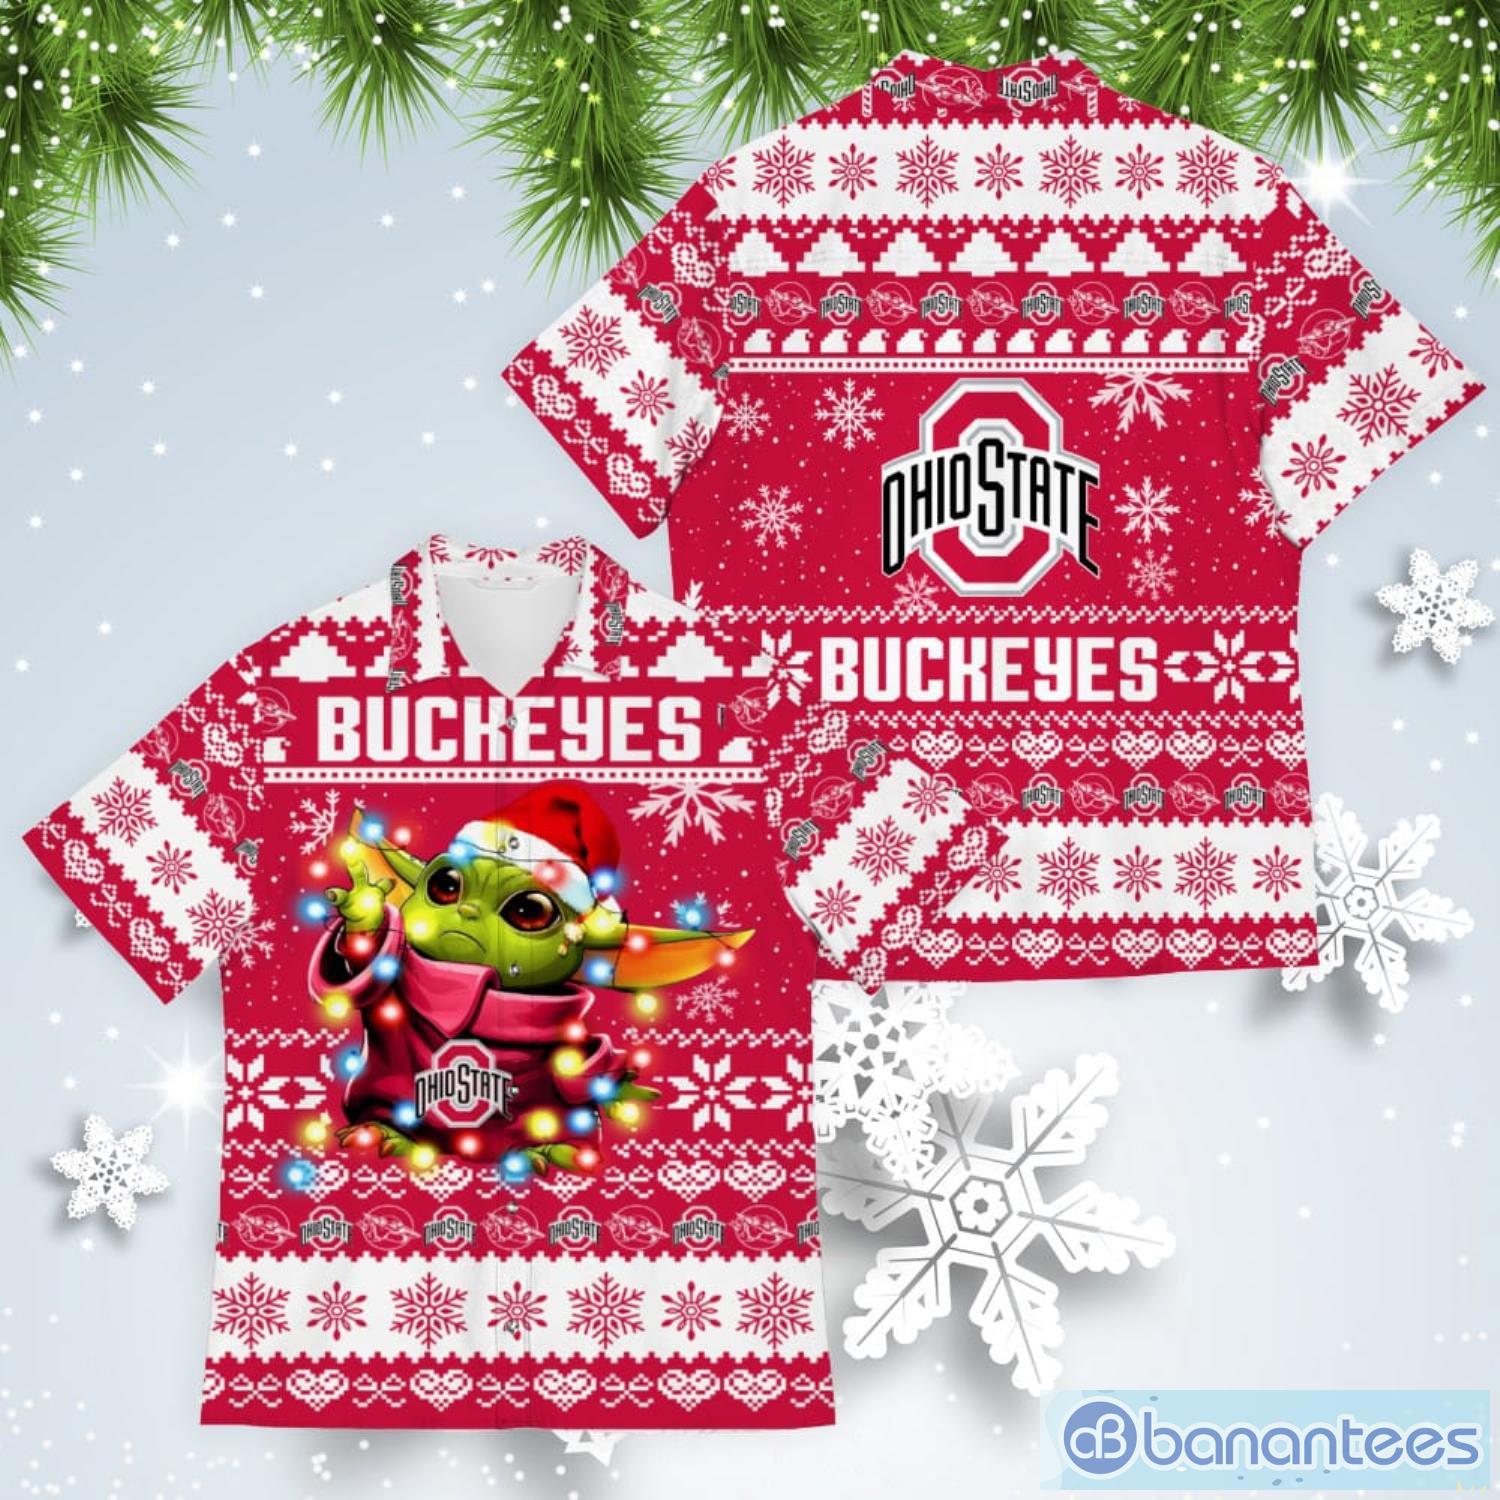 Ohio State Buckeyes Baby Yoda Star Wars American Ugly Christmas Sweater Pattern Hawaiian Shirt Product Photo 1